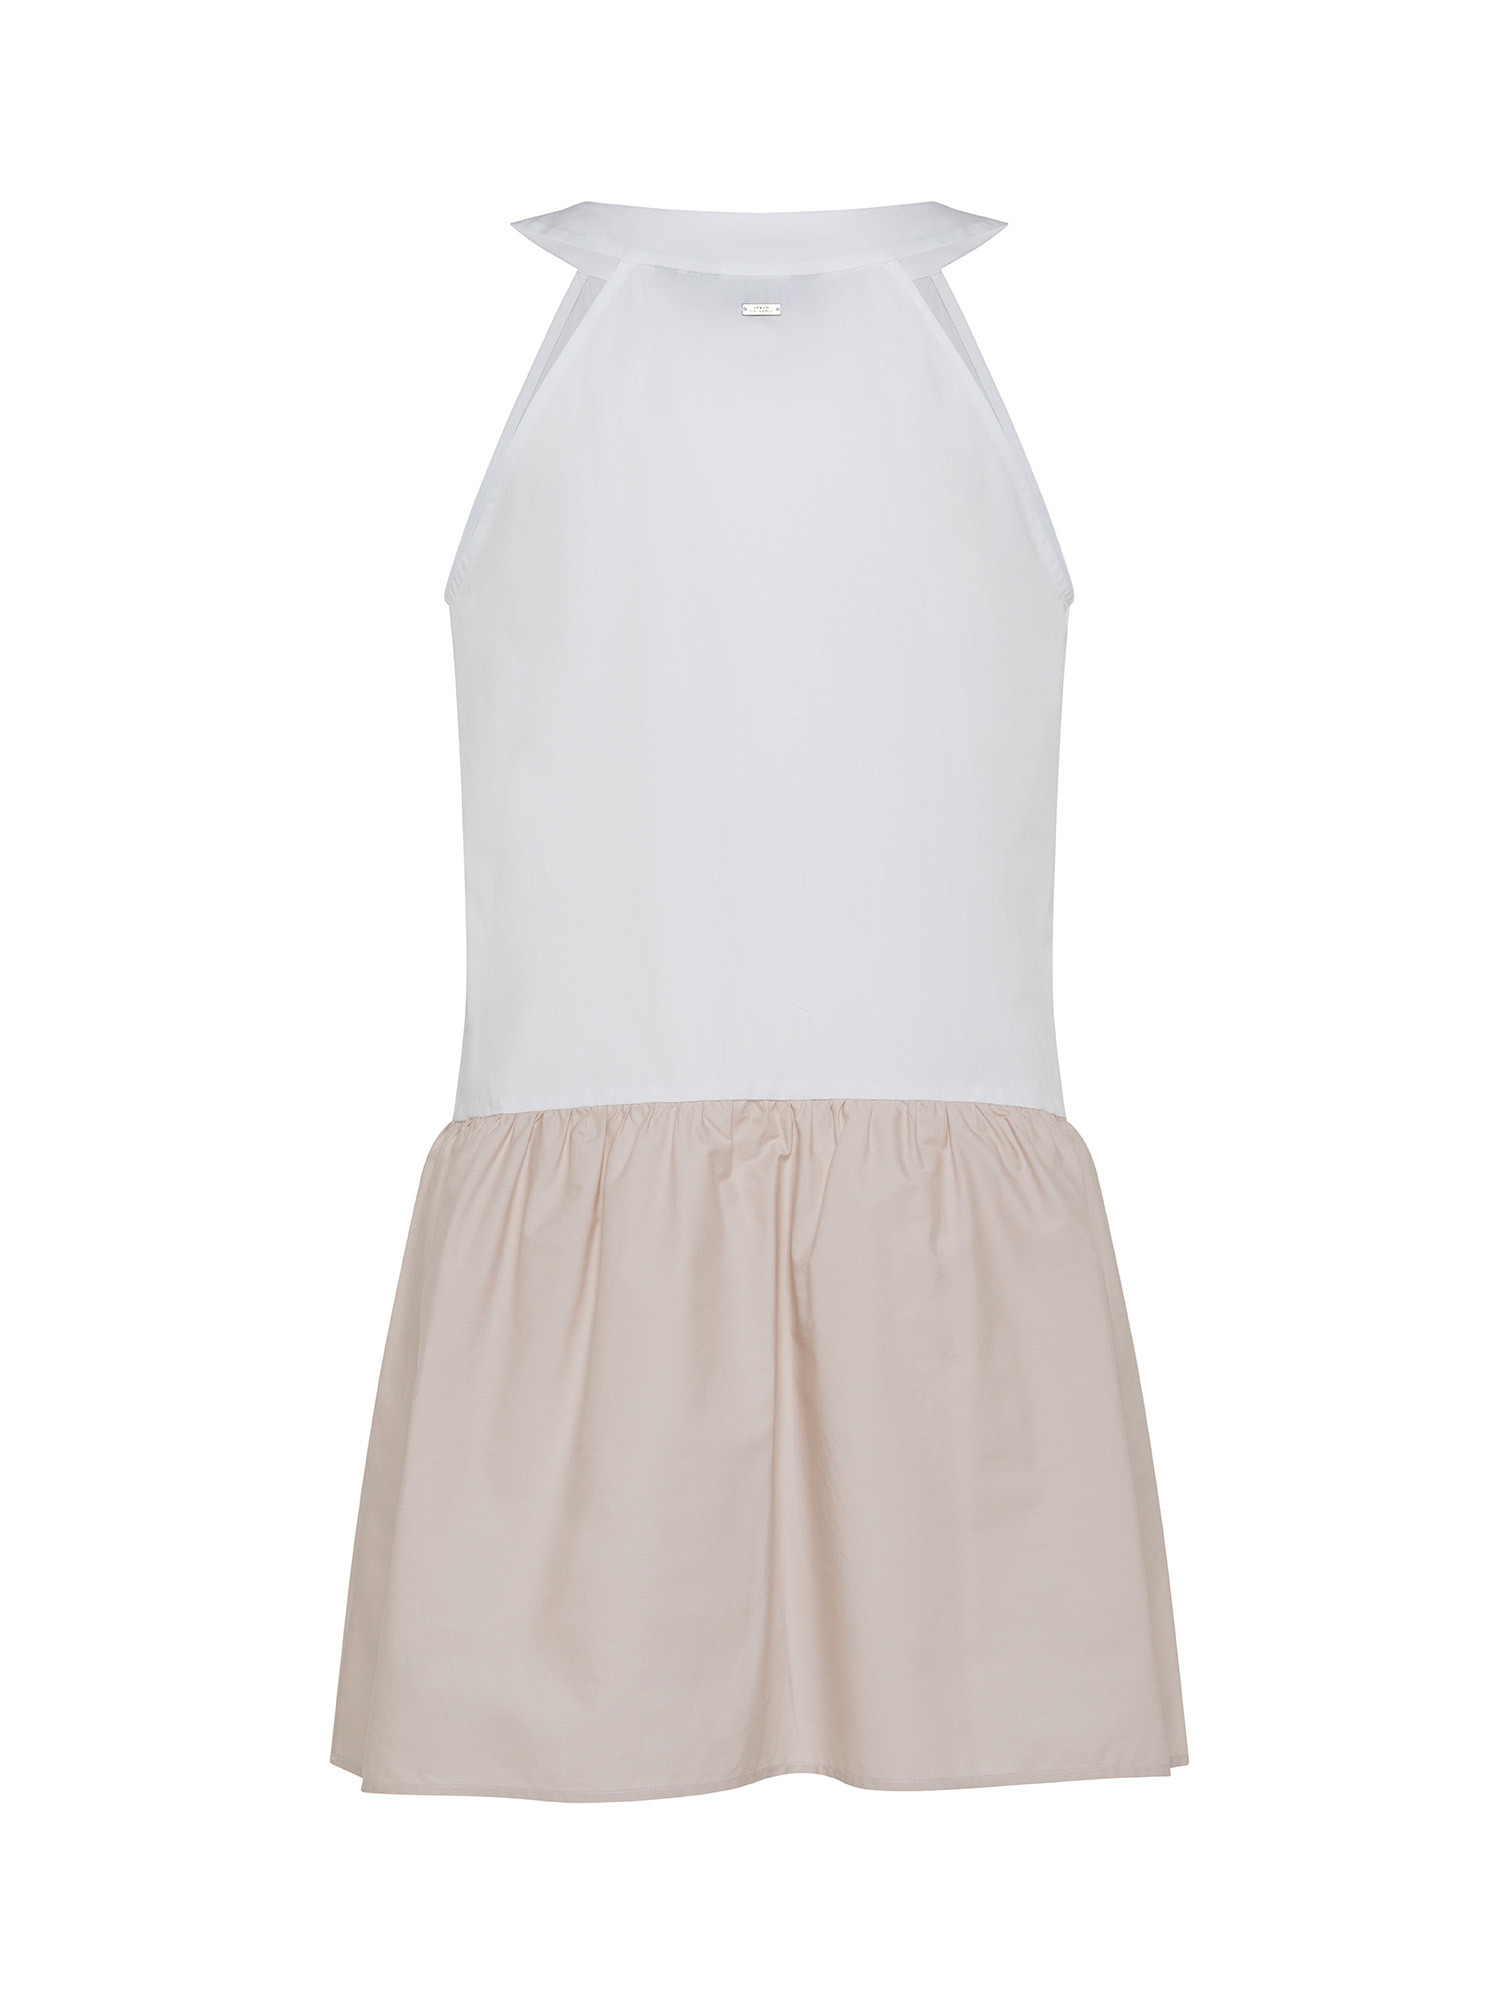 Armani Exchange - Cotton dress, White, large image number 1